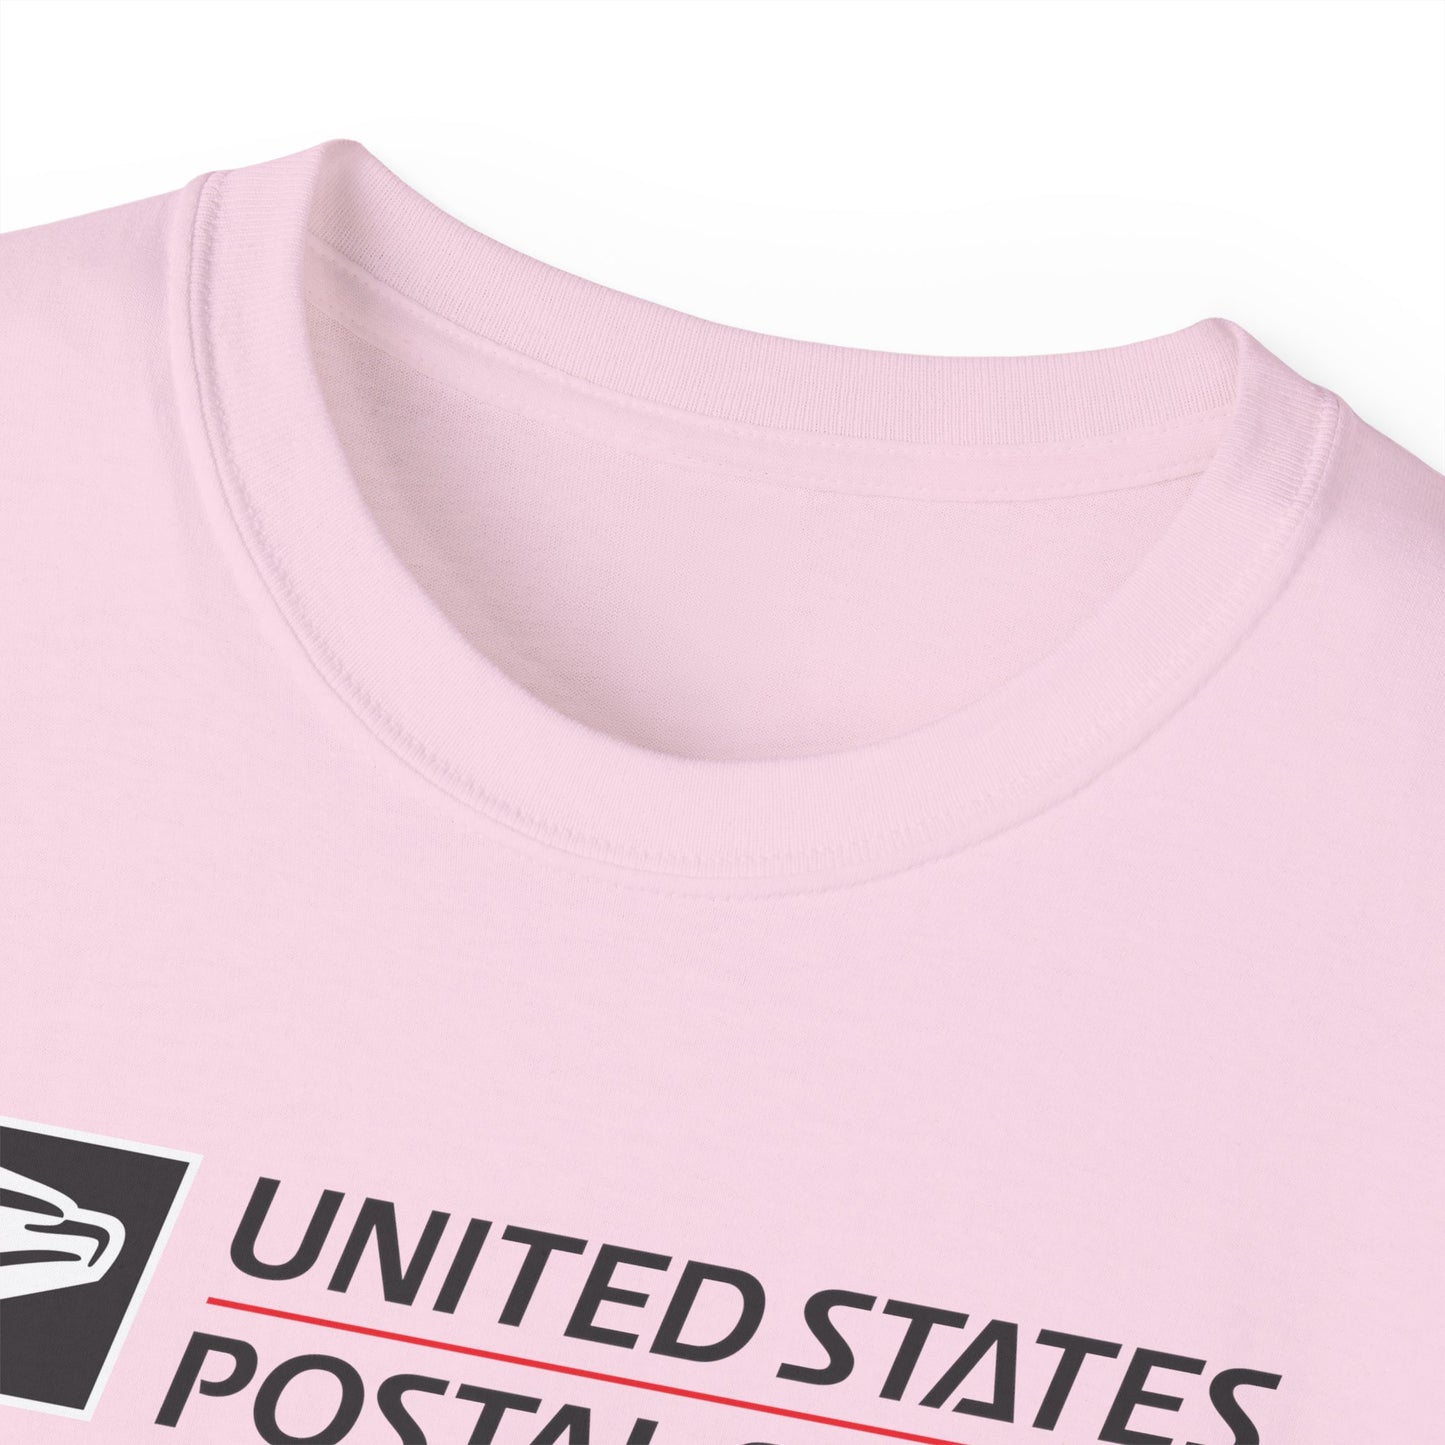 USPS Commanders W Logo Unisex T-shirt